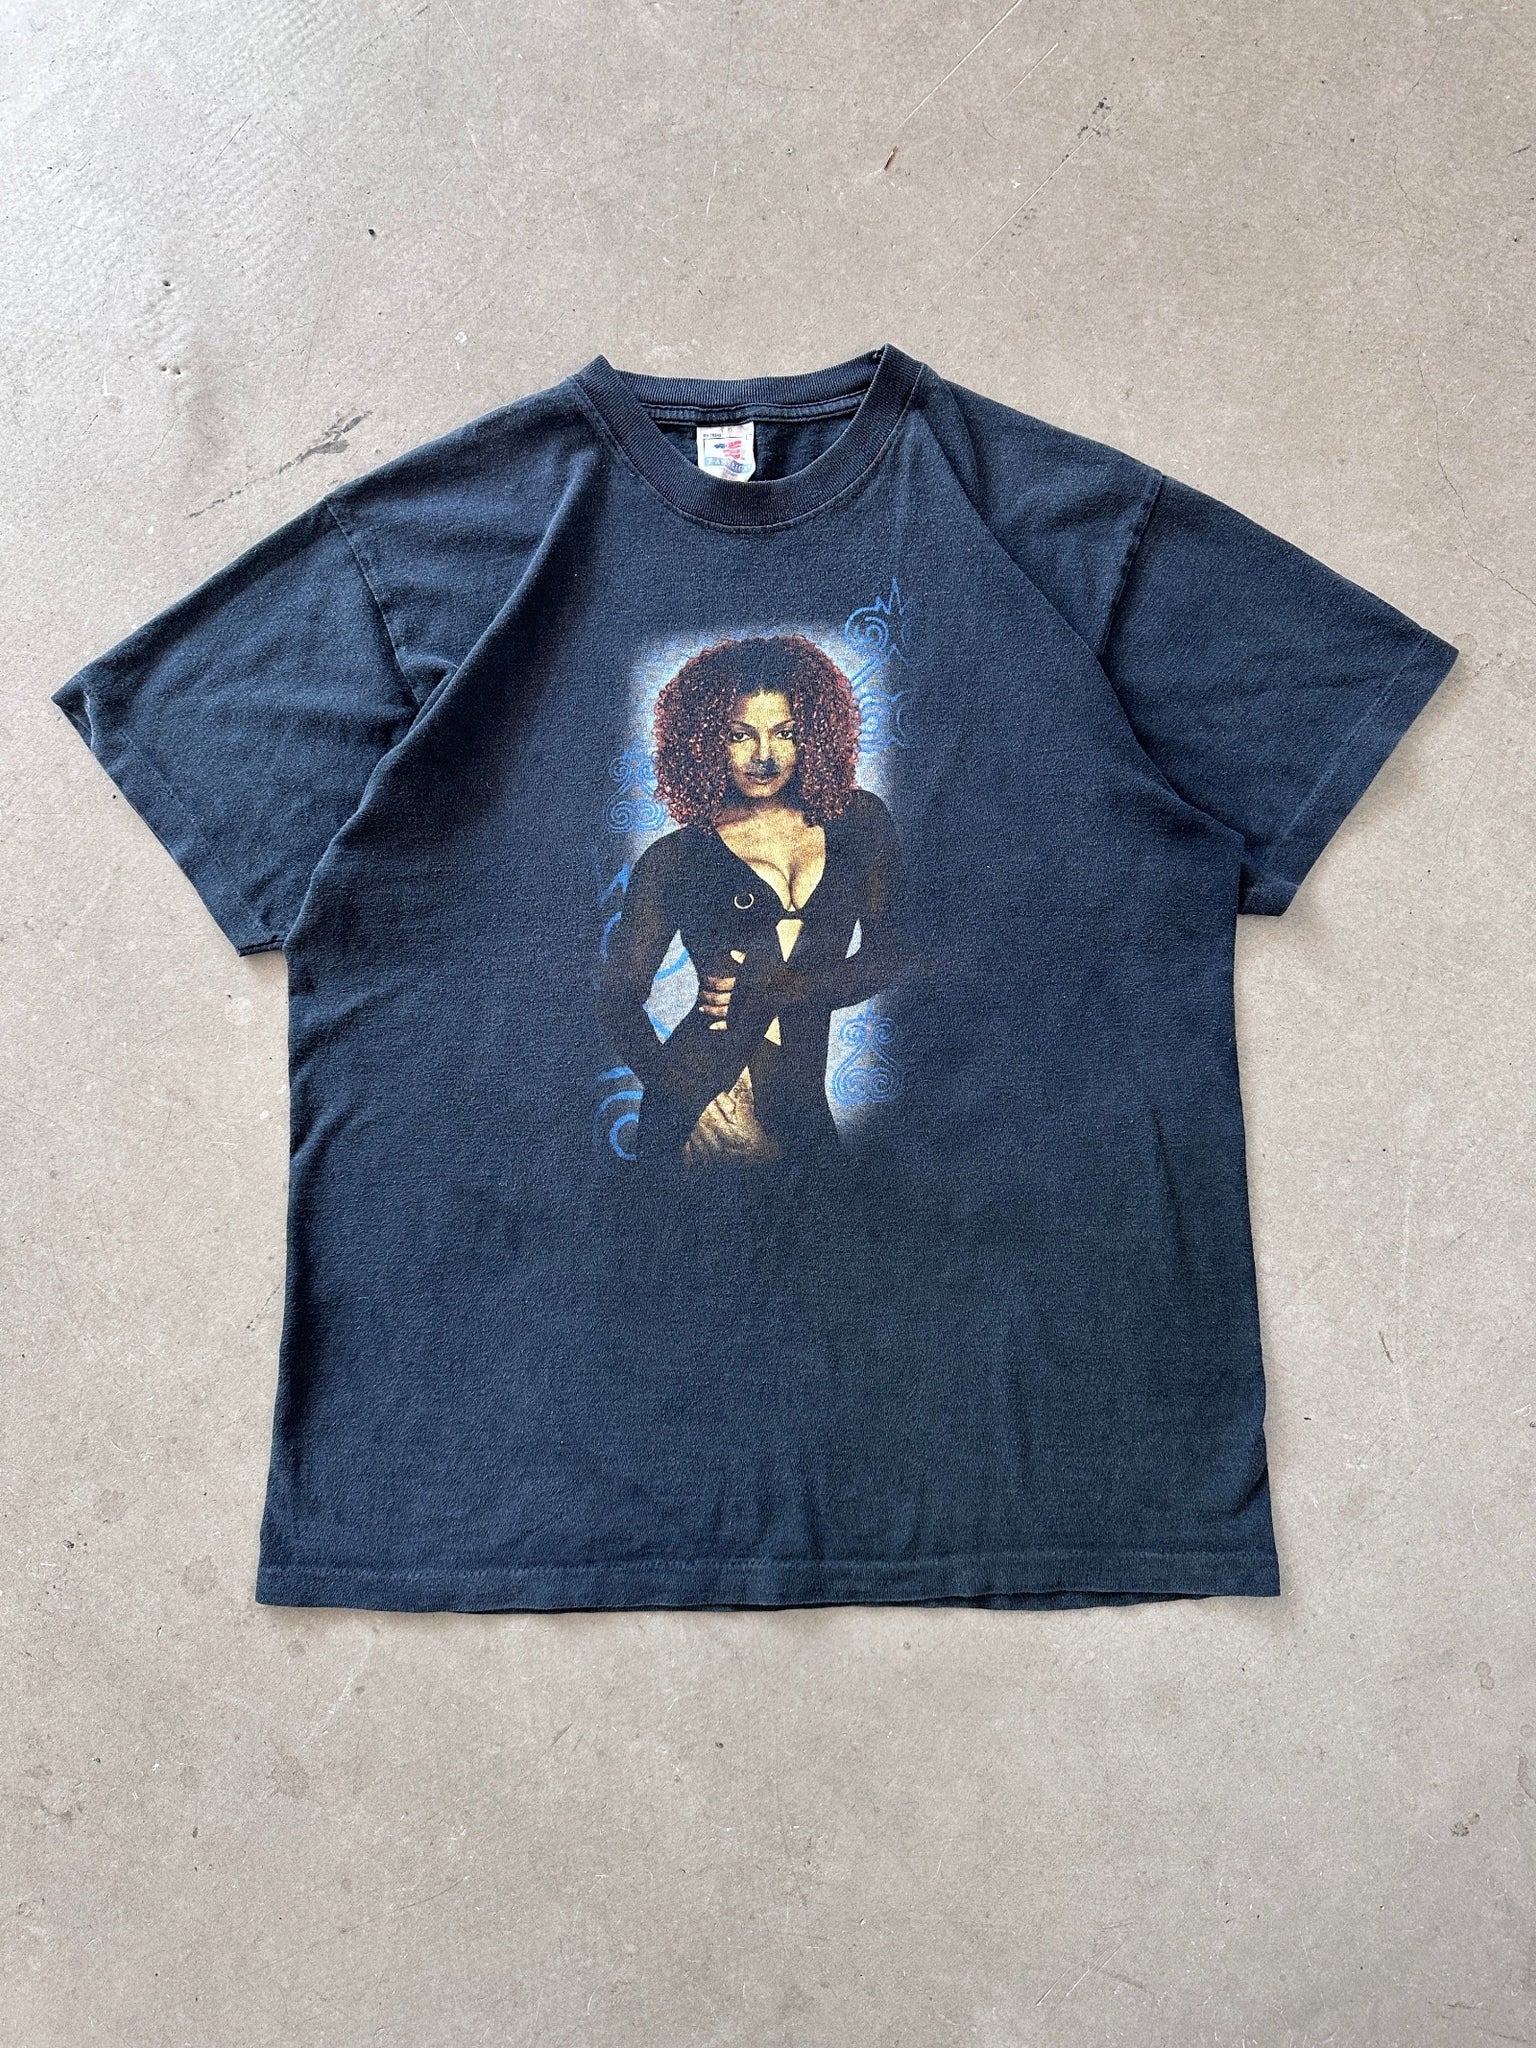 1998 Janet Jackson Velvet Rope Tour T-Shirt - L